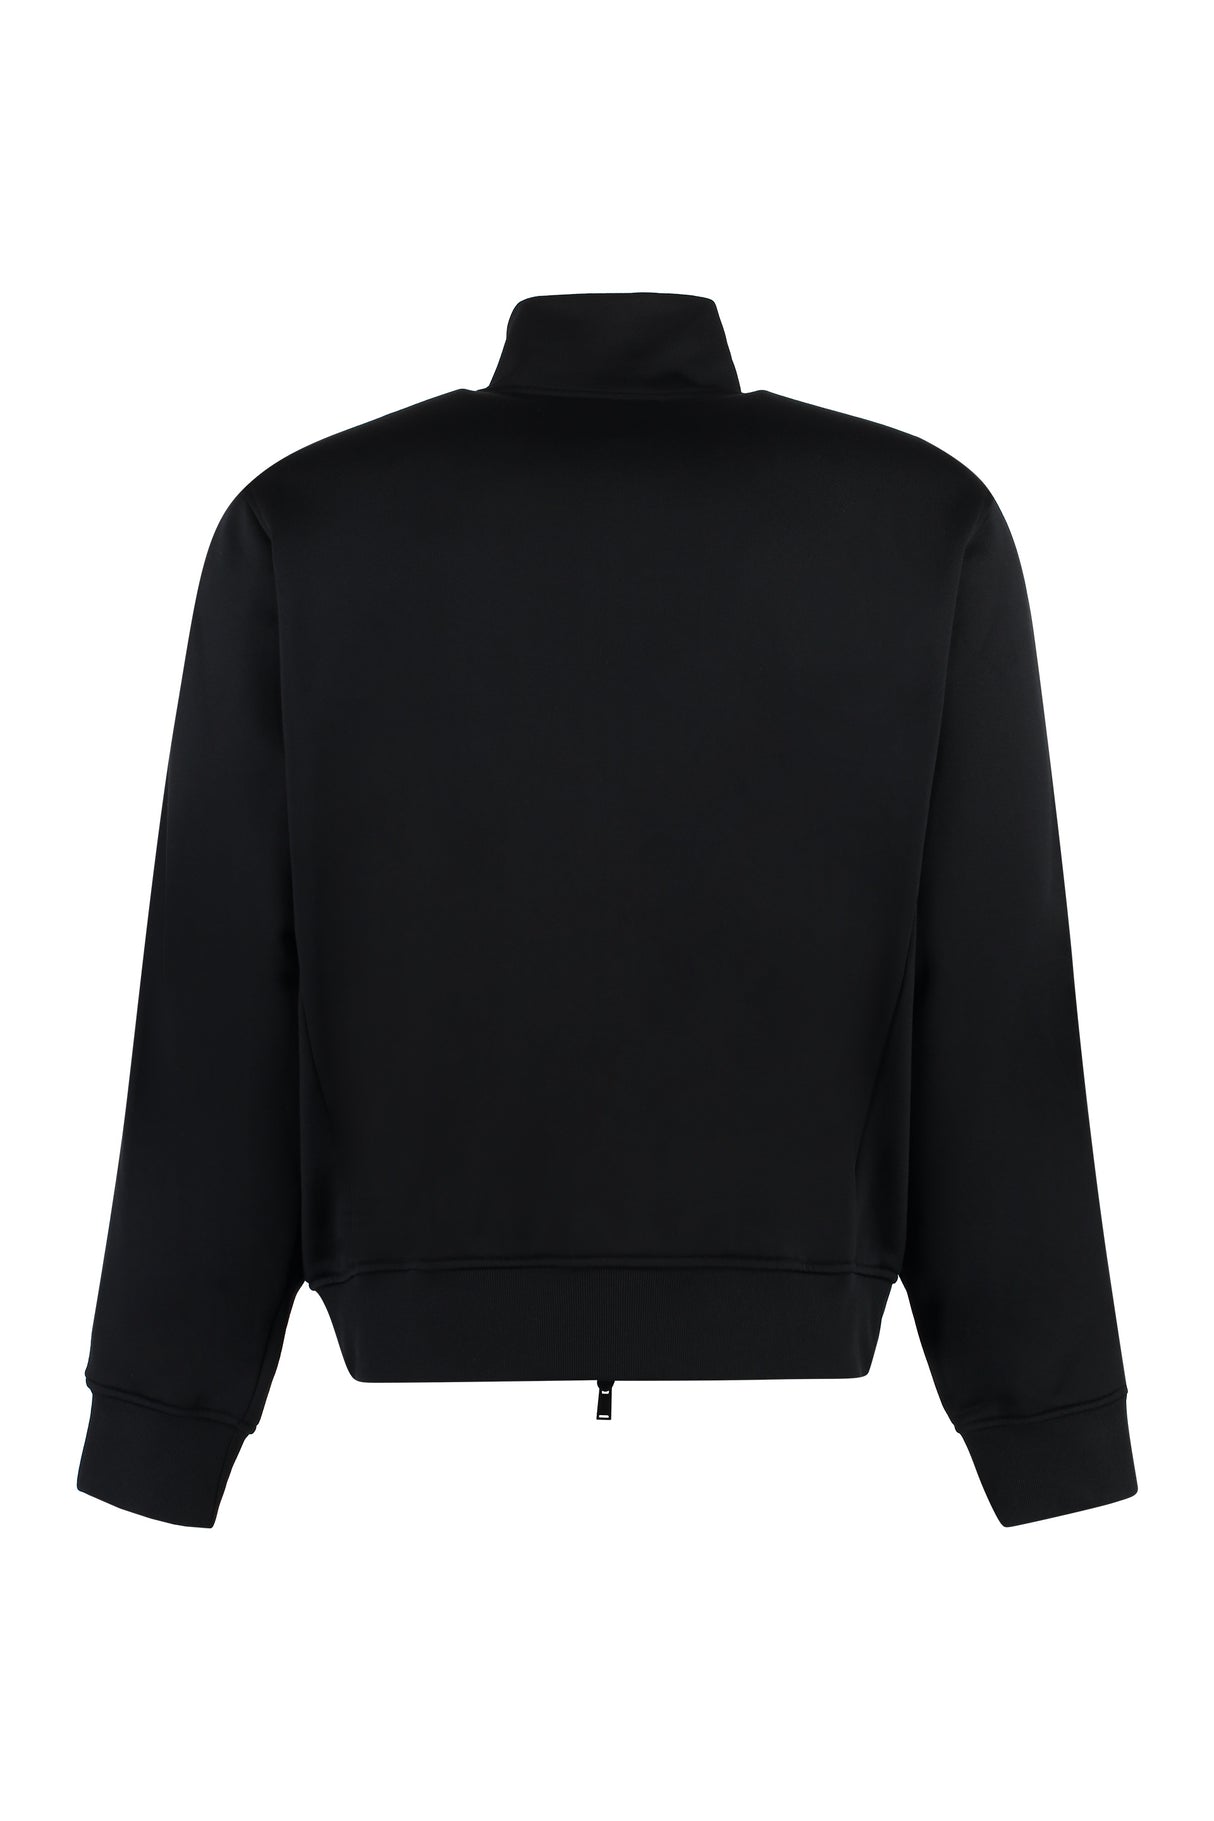 DSQUARED2 Men's Black Full-Zip Nylon Sweatshirt with Contrasting Logo Bands